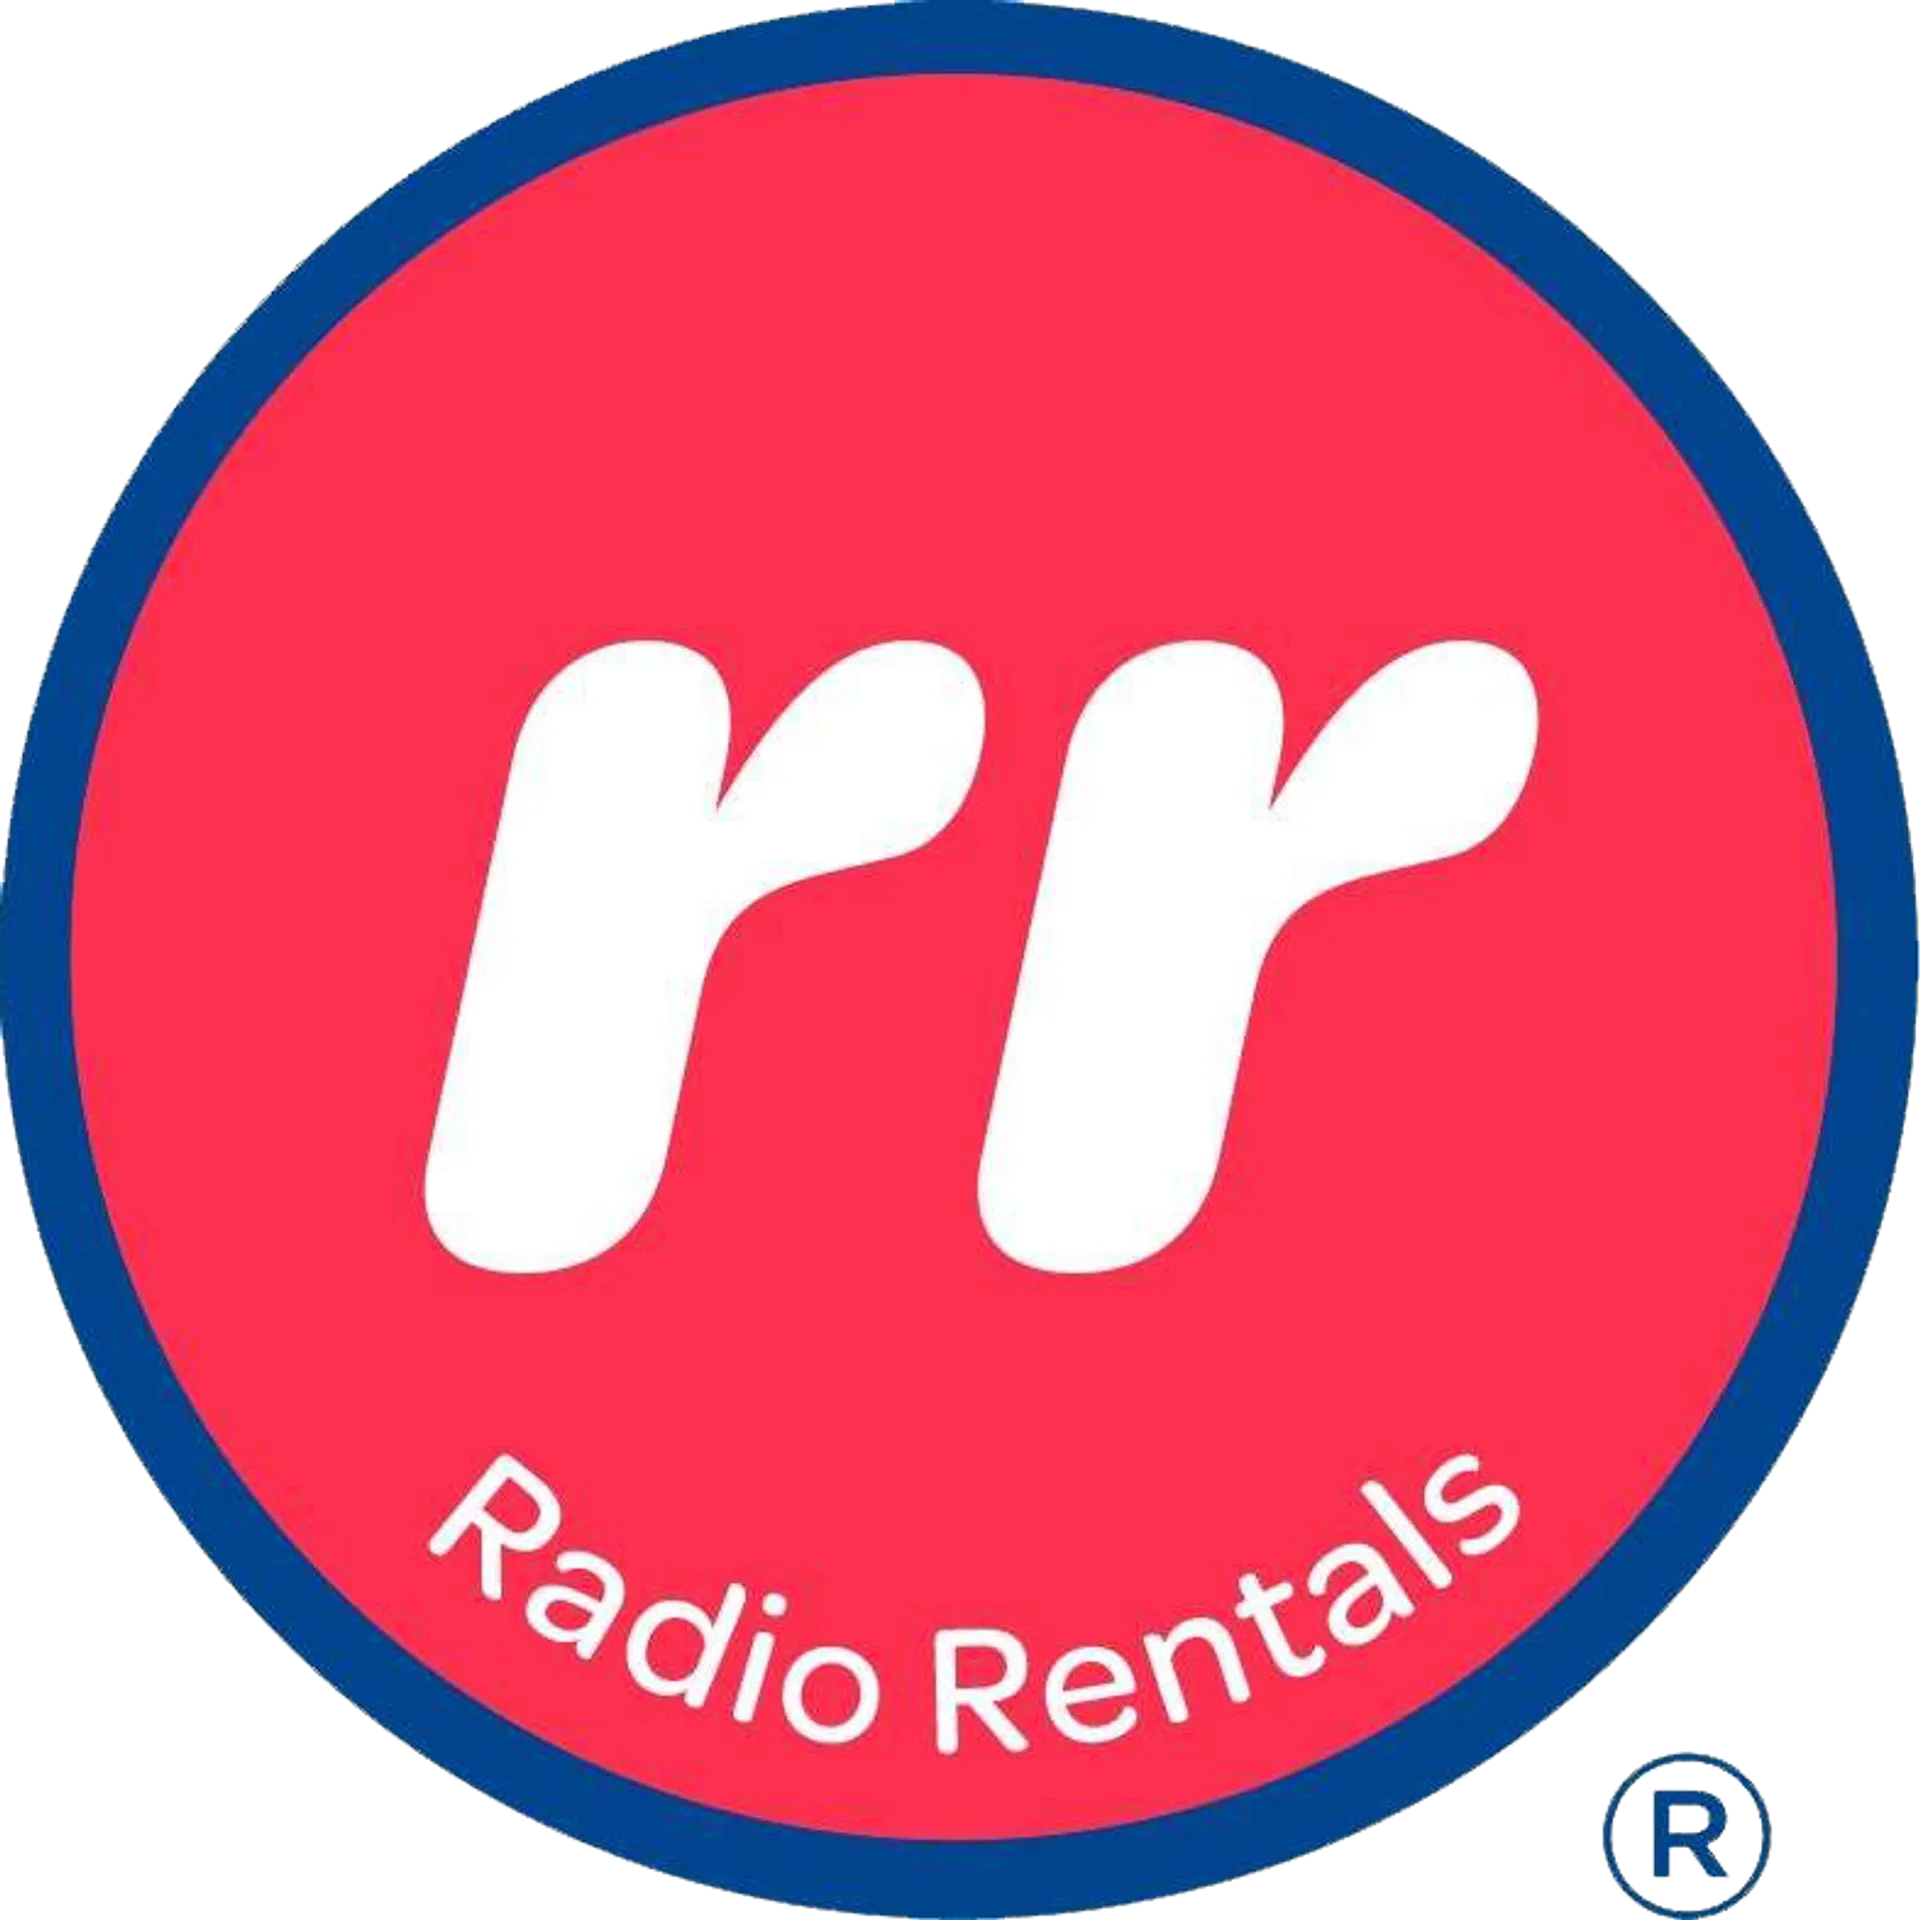 RADIO RENTALS logo